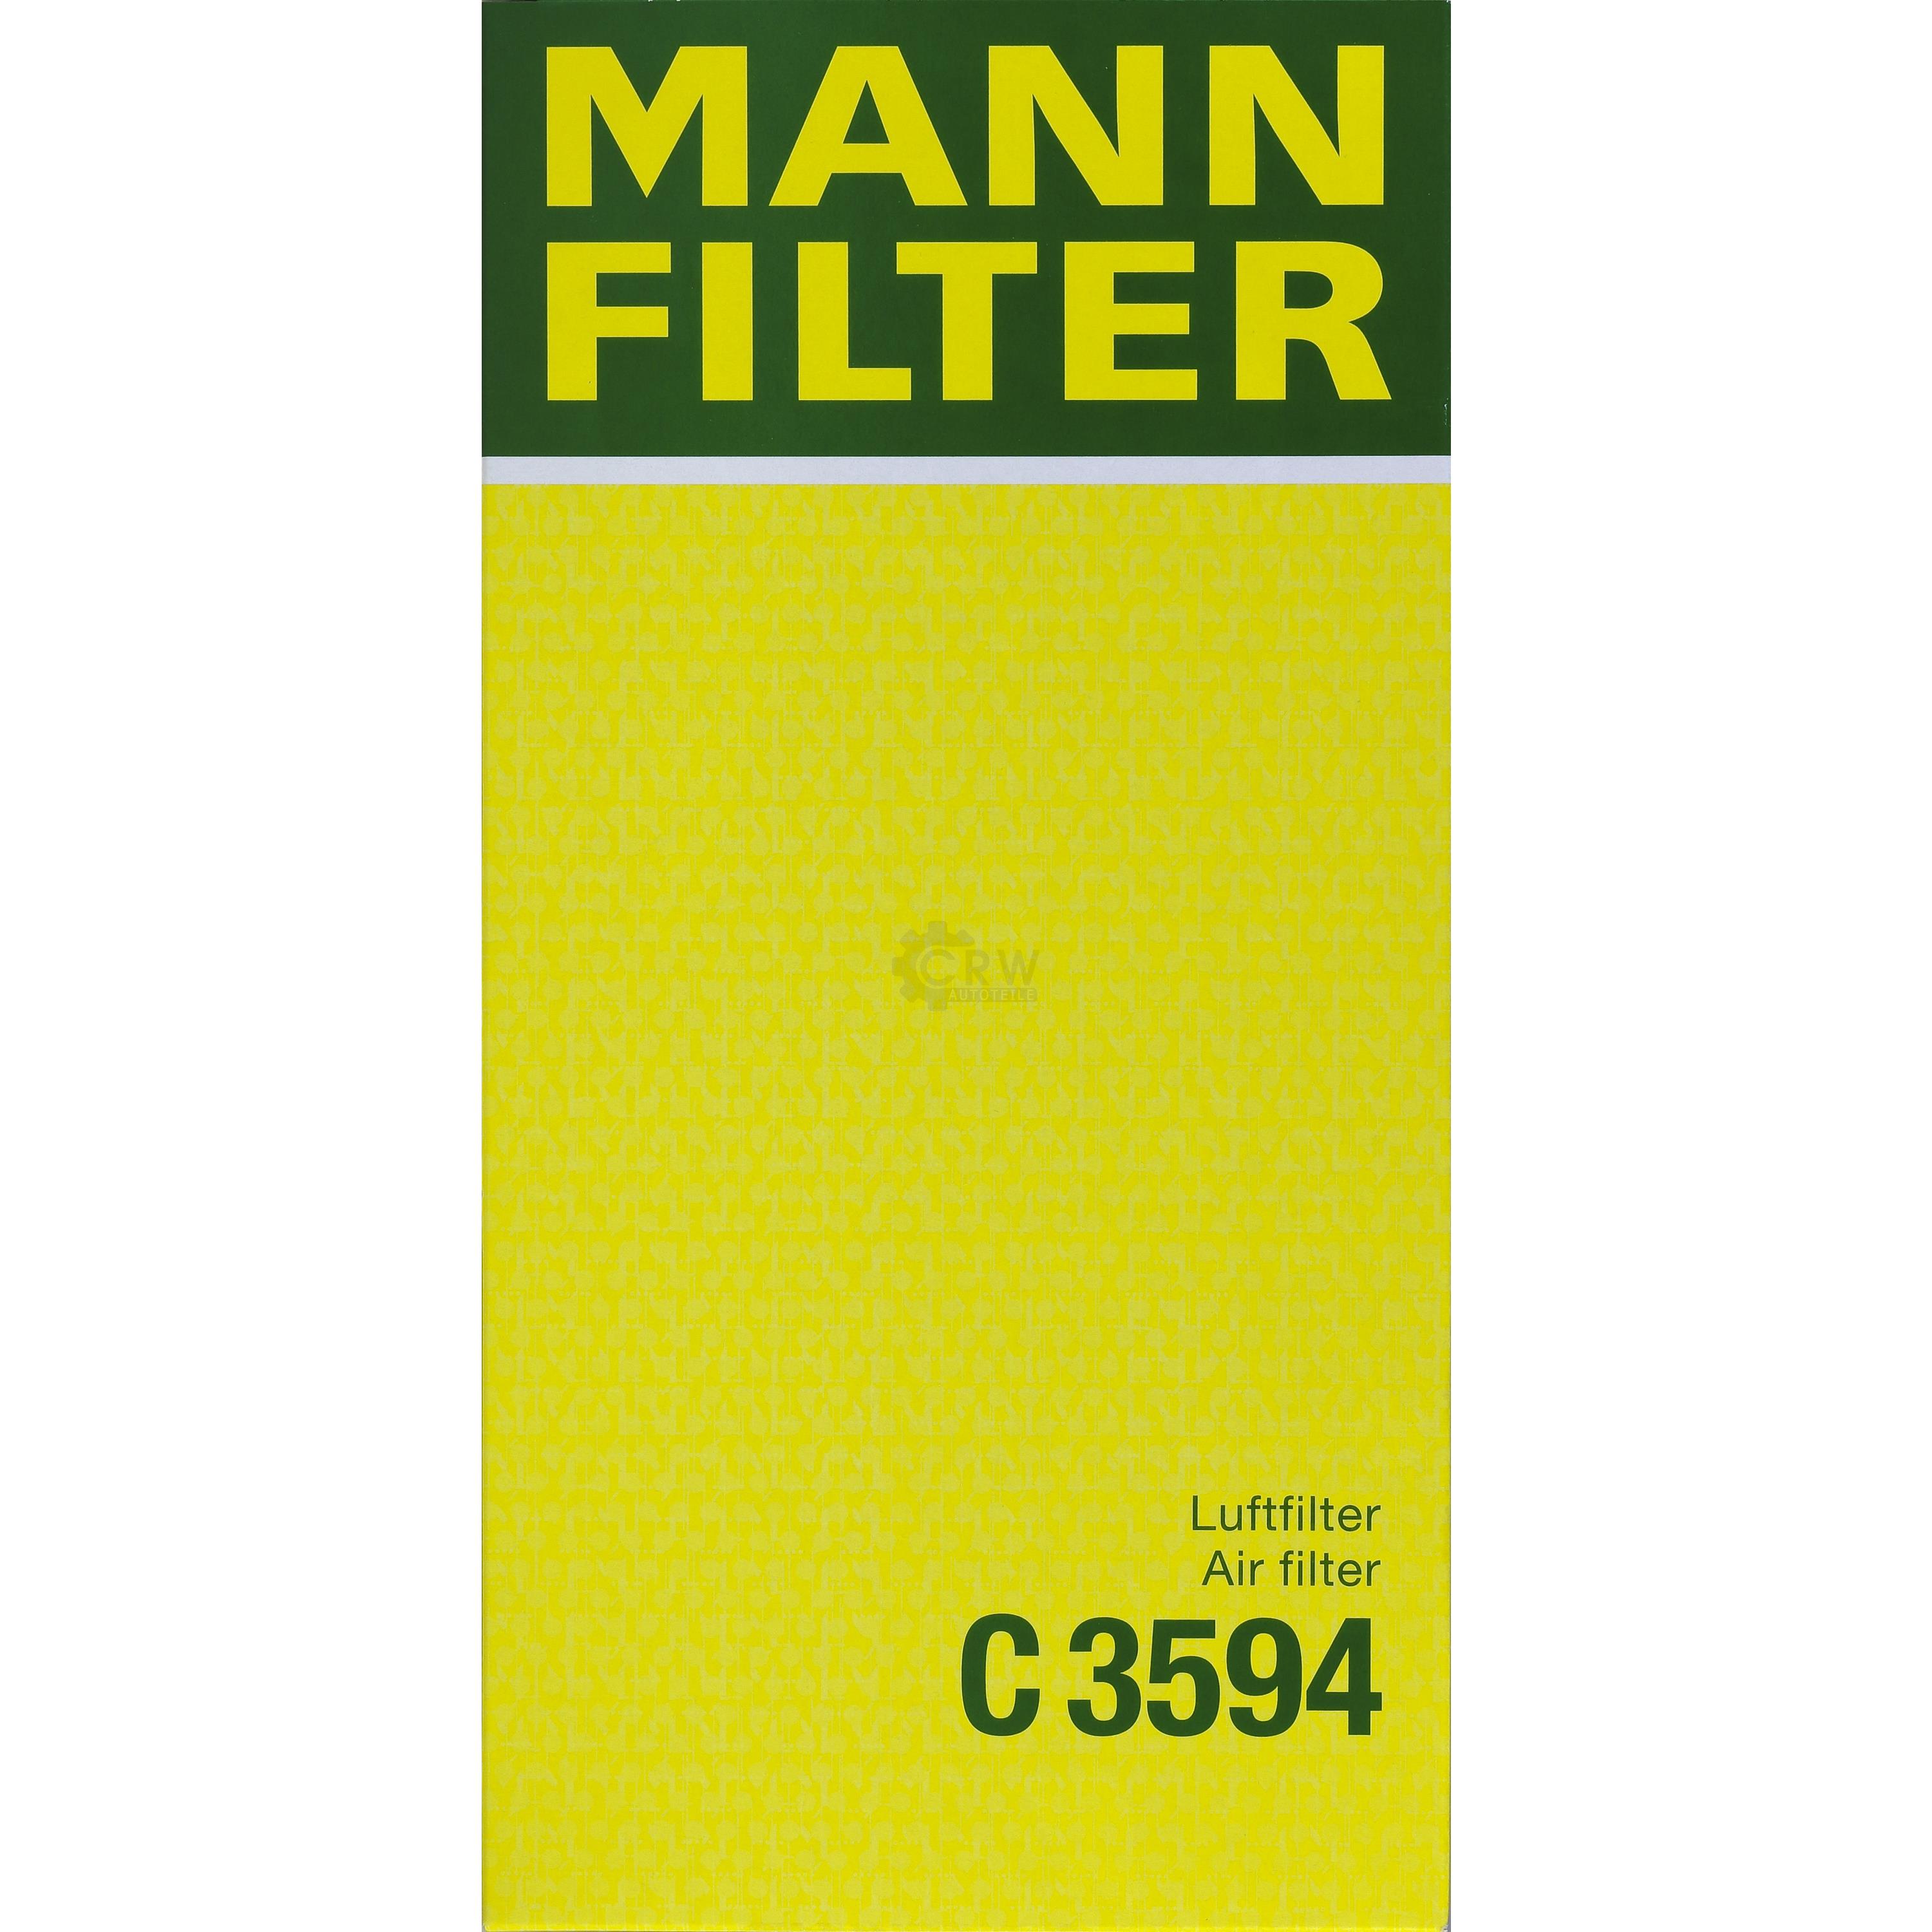 MANN-FILTER Luftfilter für Volvo V40 Kombi 645 1.8 VW 2.0 1.6 S40 I 644 VS